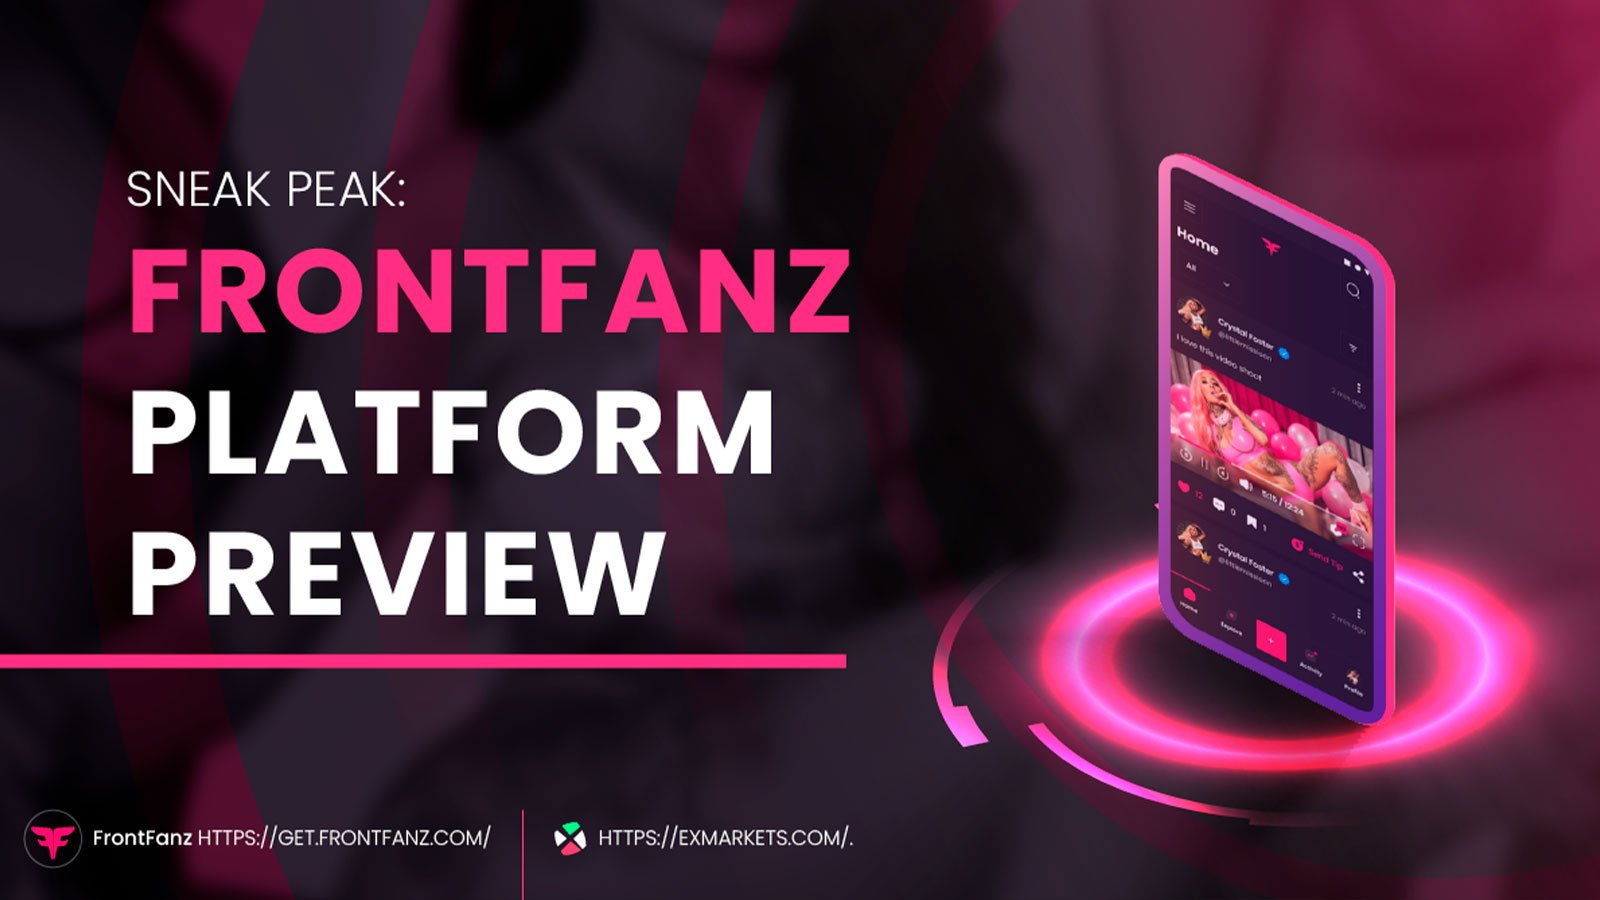 FrontFanz- the New MATIC Sensation Shows A Glimpse Of Its Platform